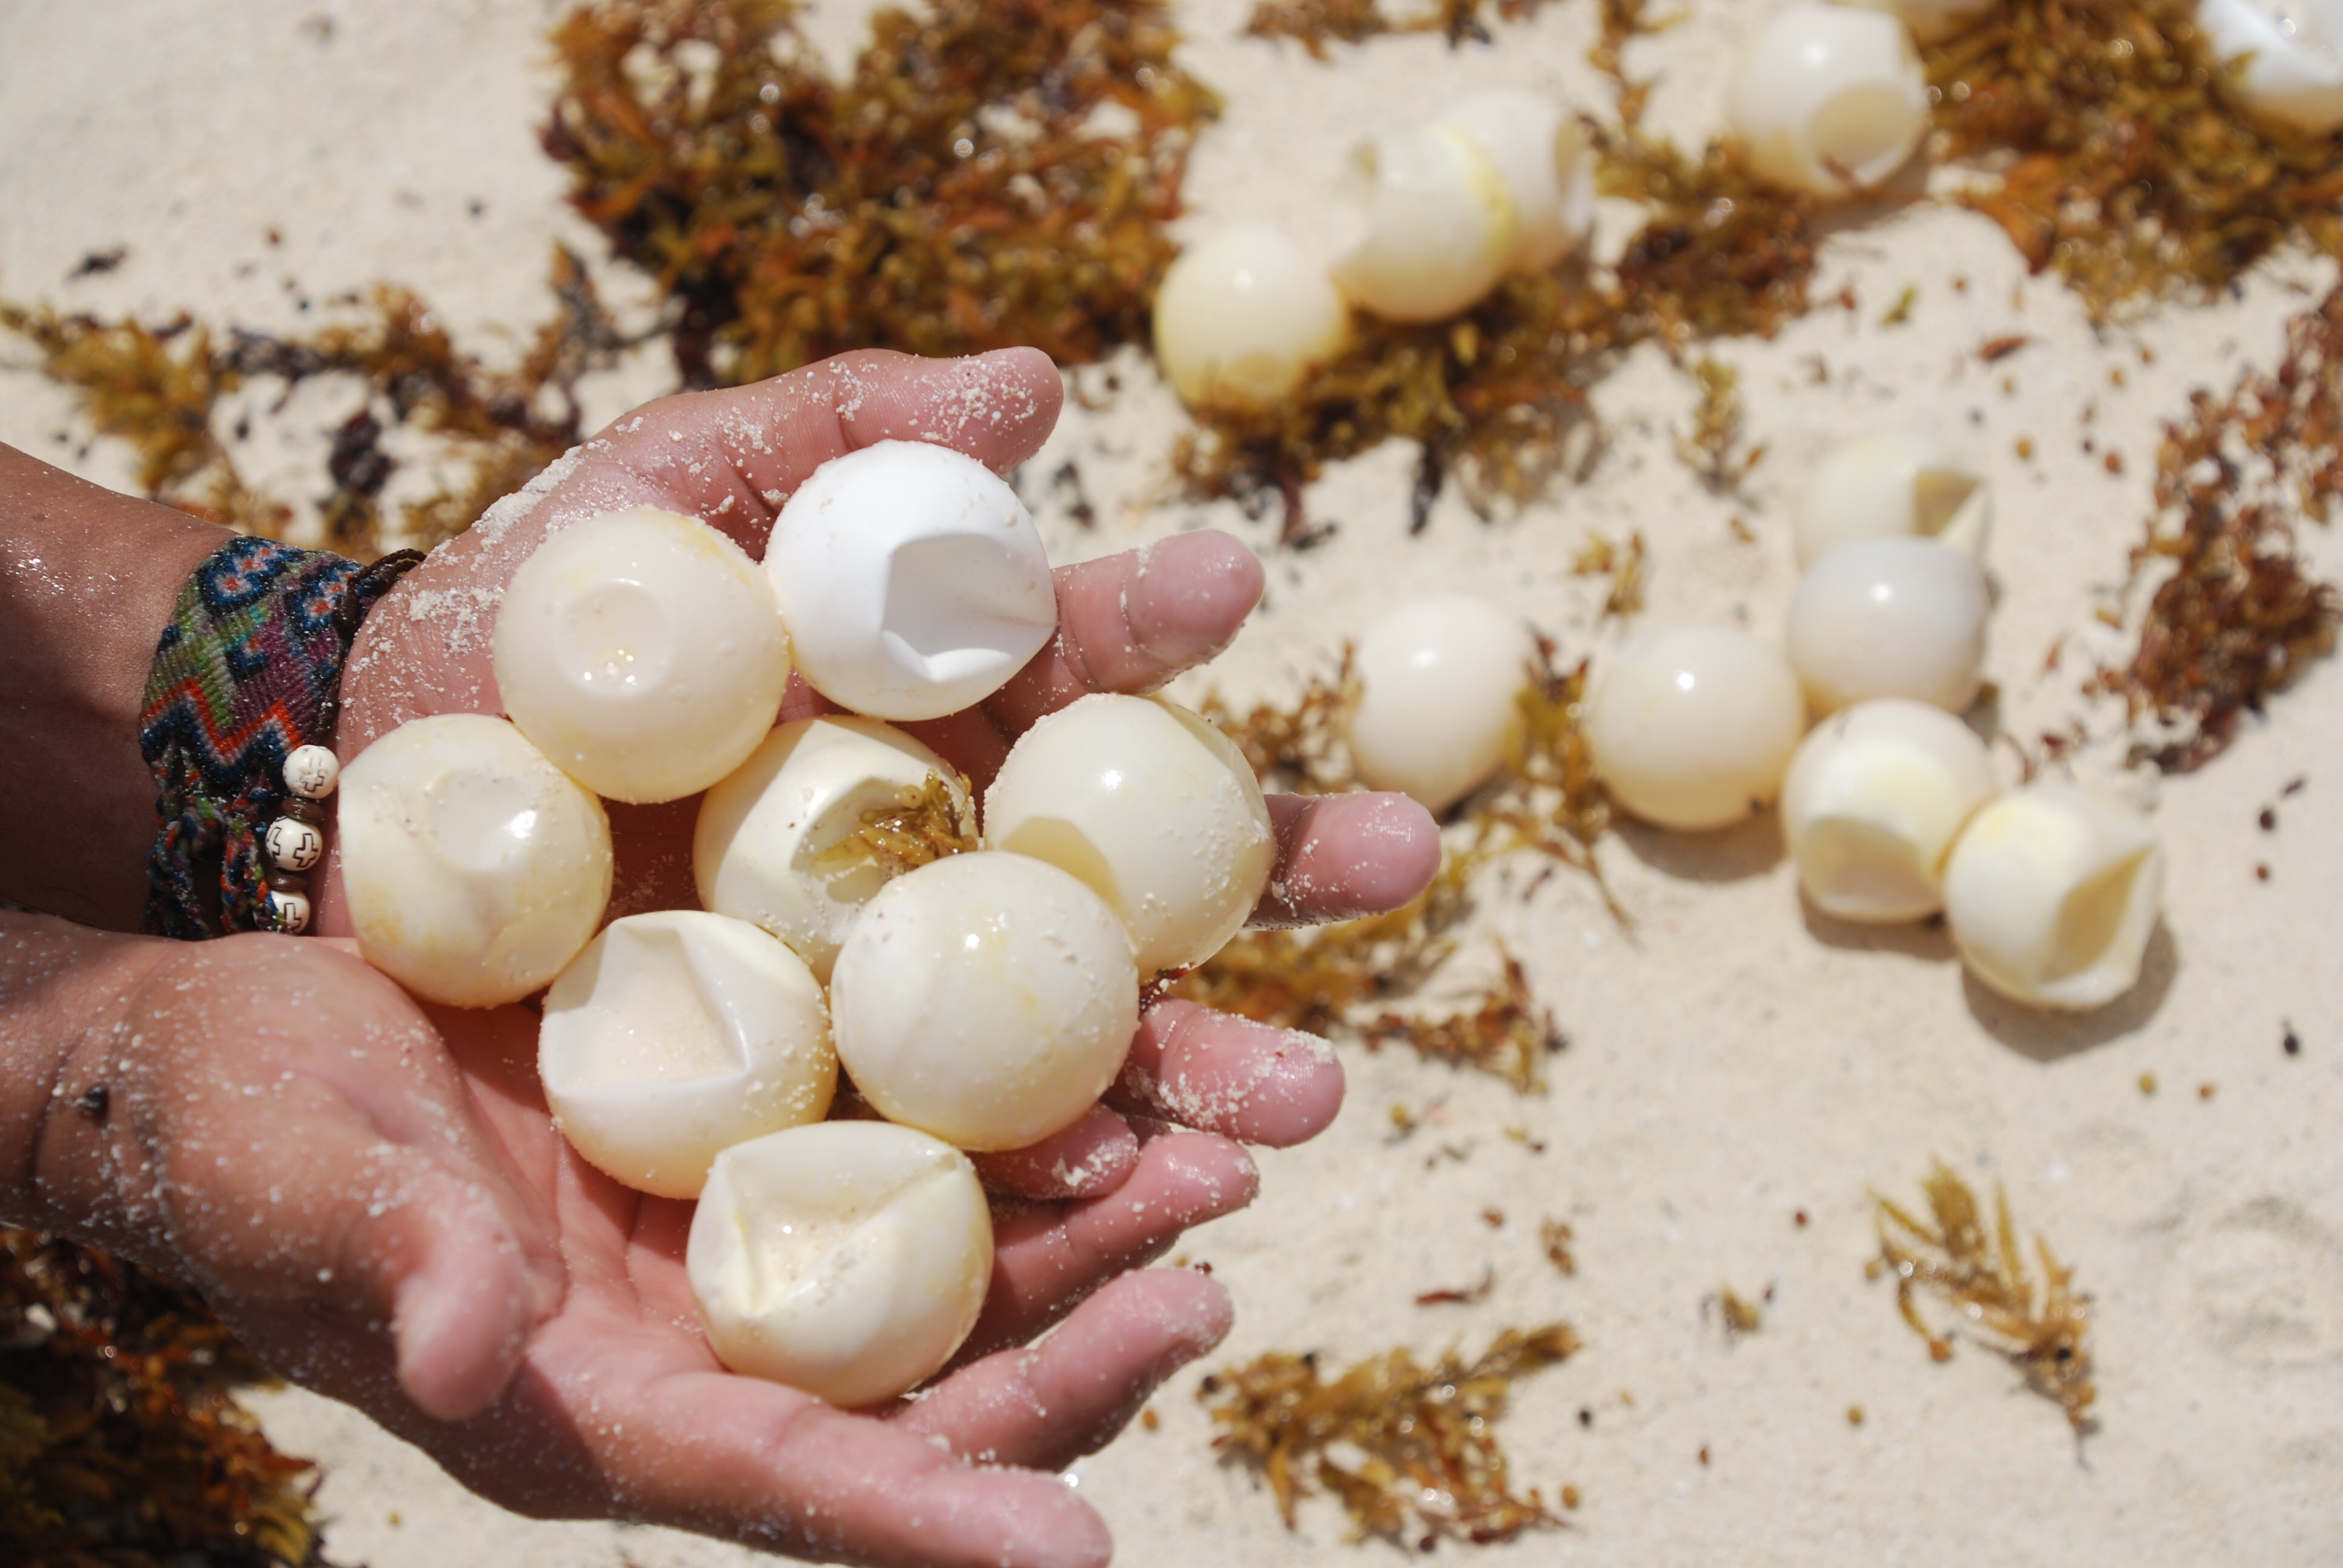 Sea turtle eggs found on the beach in Cancun. Photo copyright Valerie Duty Citrano